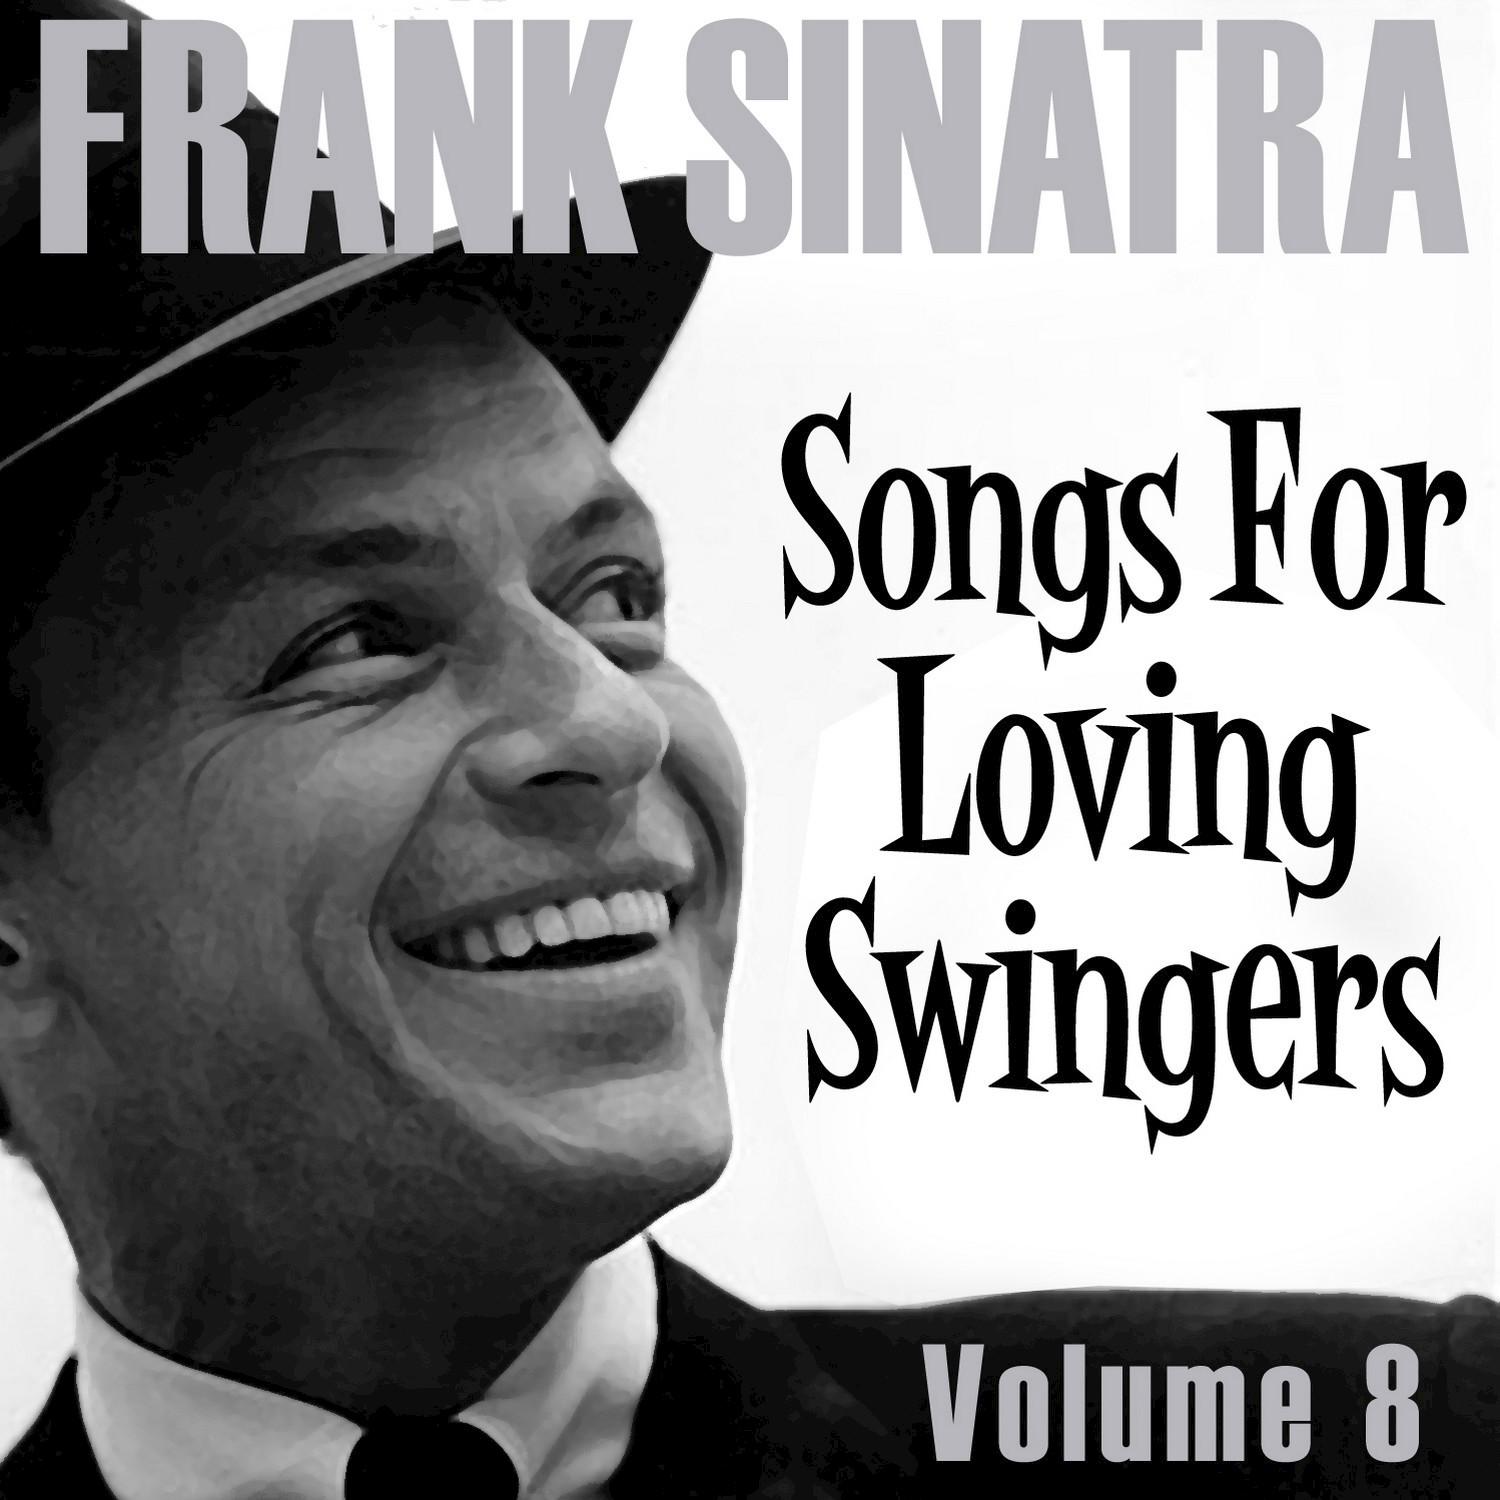 Frank Sinatra - Songs for Loving Swingers, Vol. 8